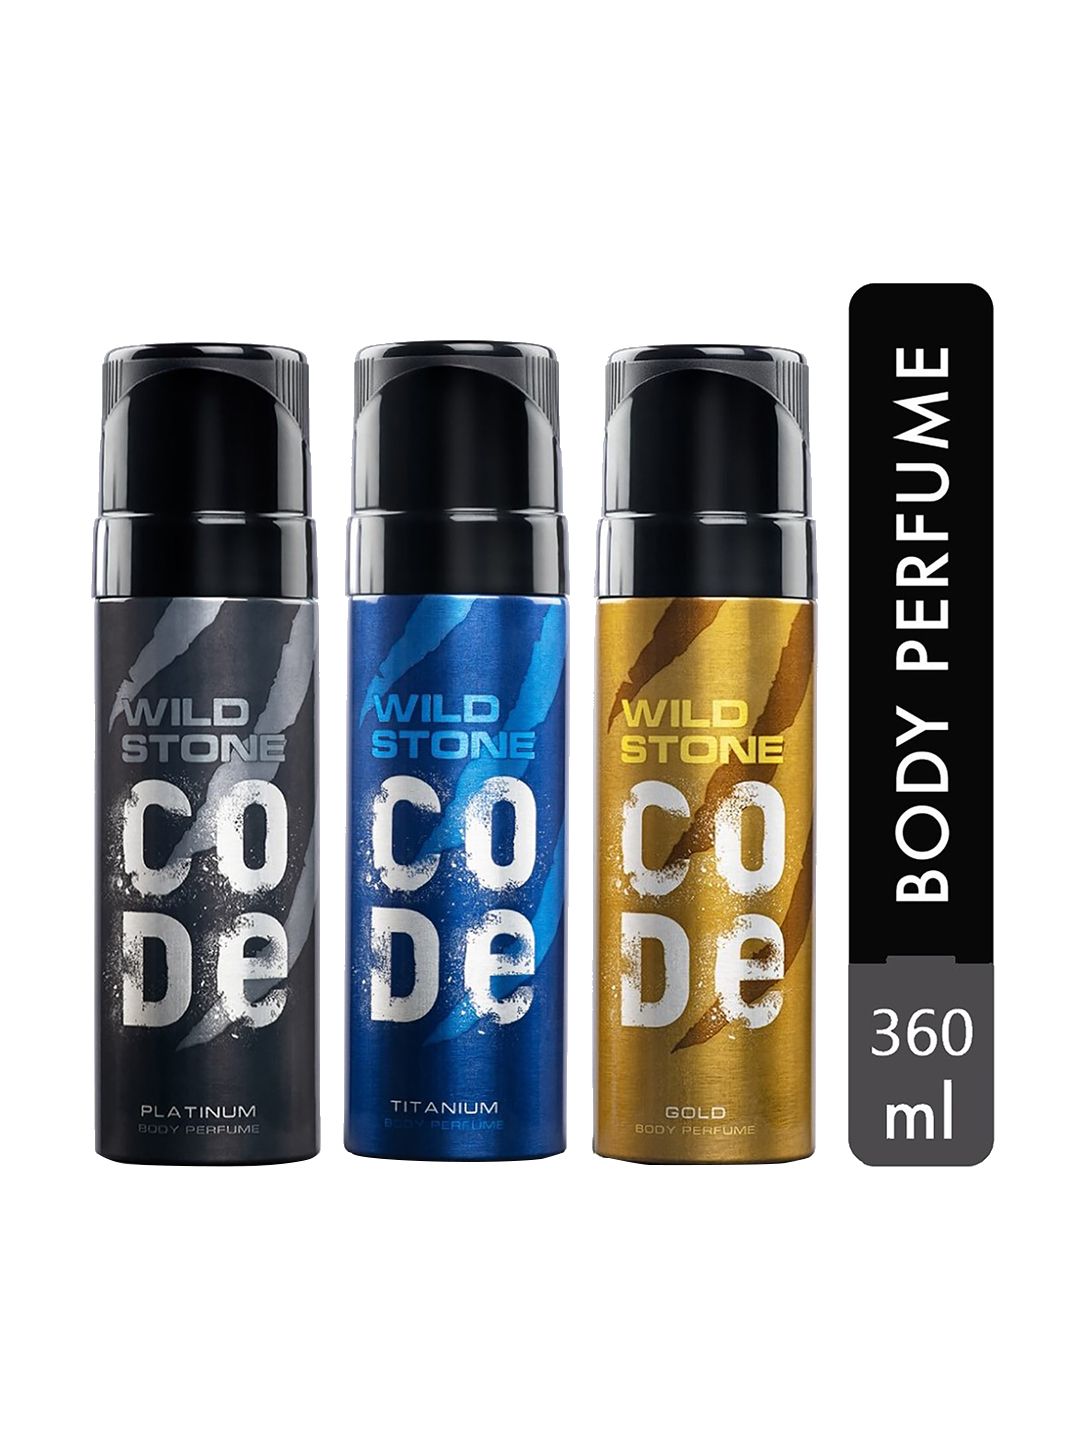 Wild stone Unisex Set Of 3 Body Perfume Spray Price in India